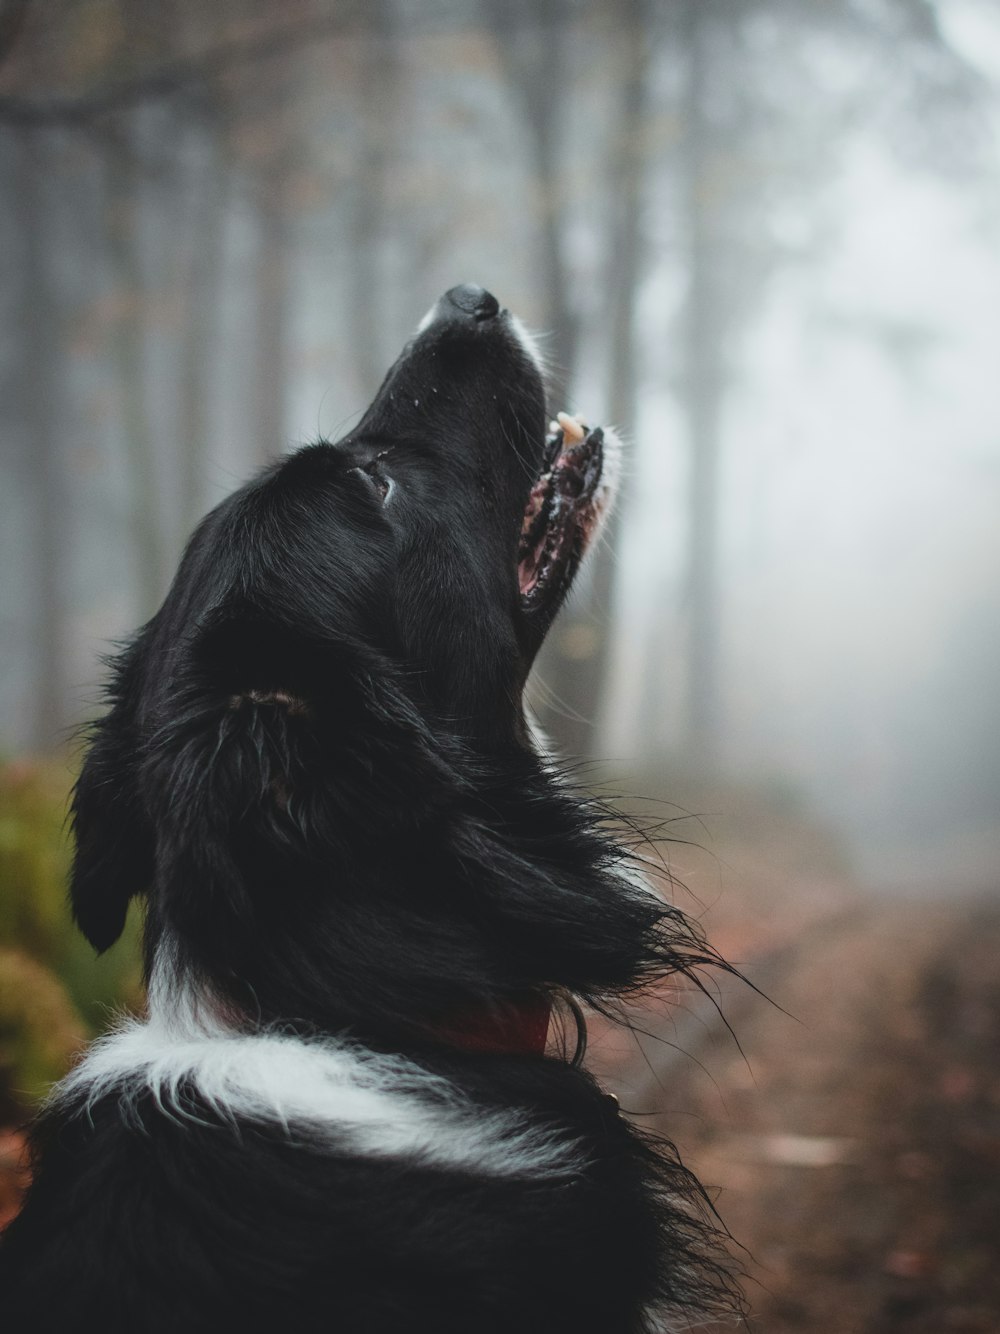 howling short-coat black and white dog under shade of trees